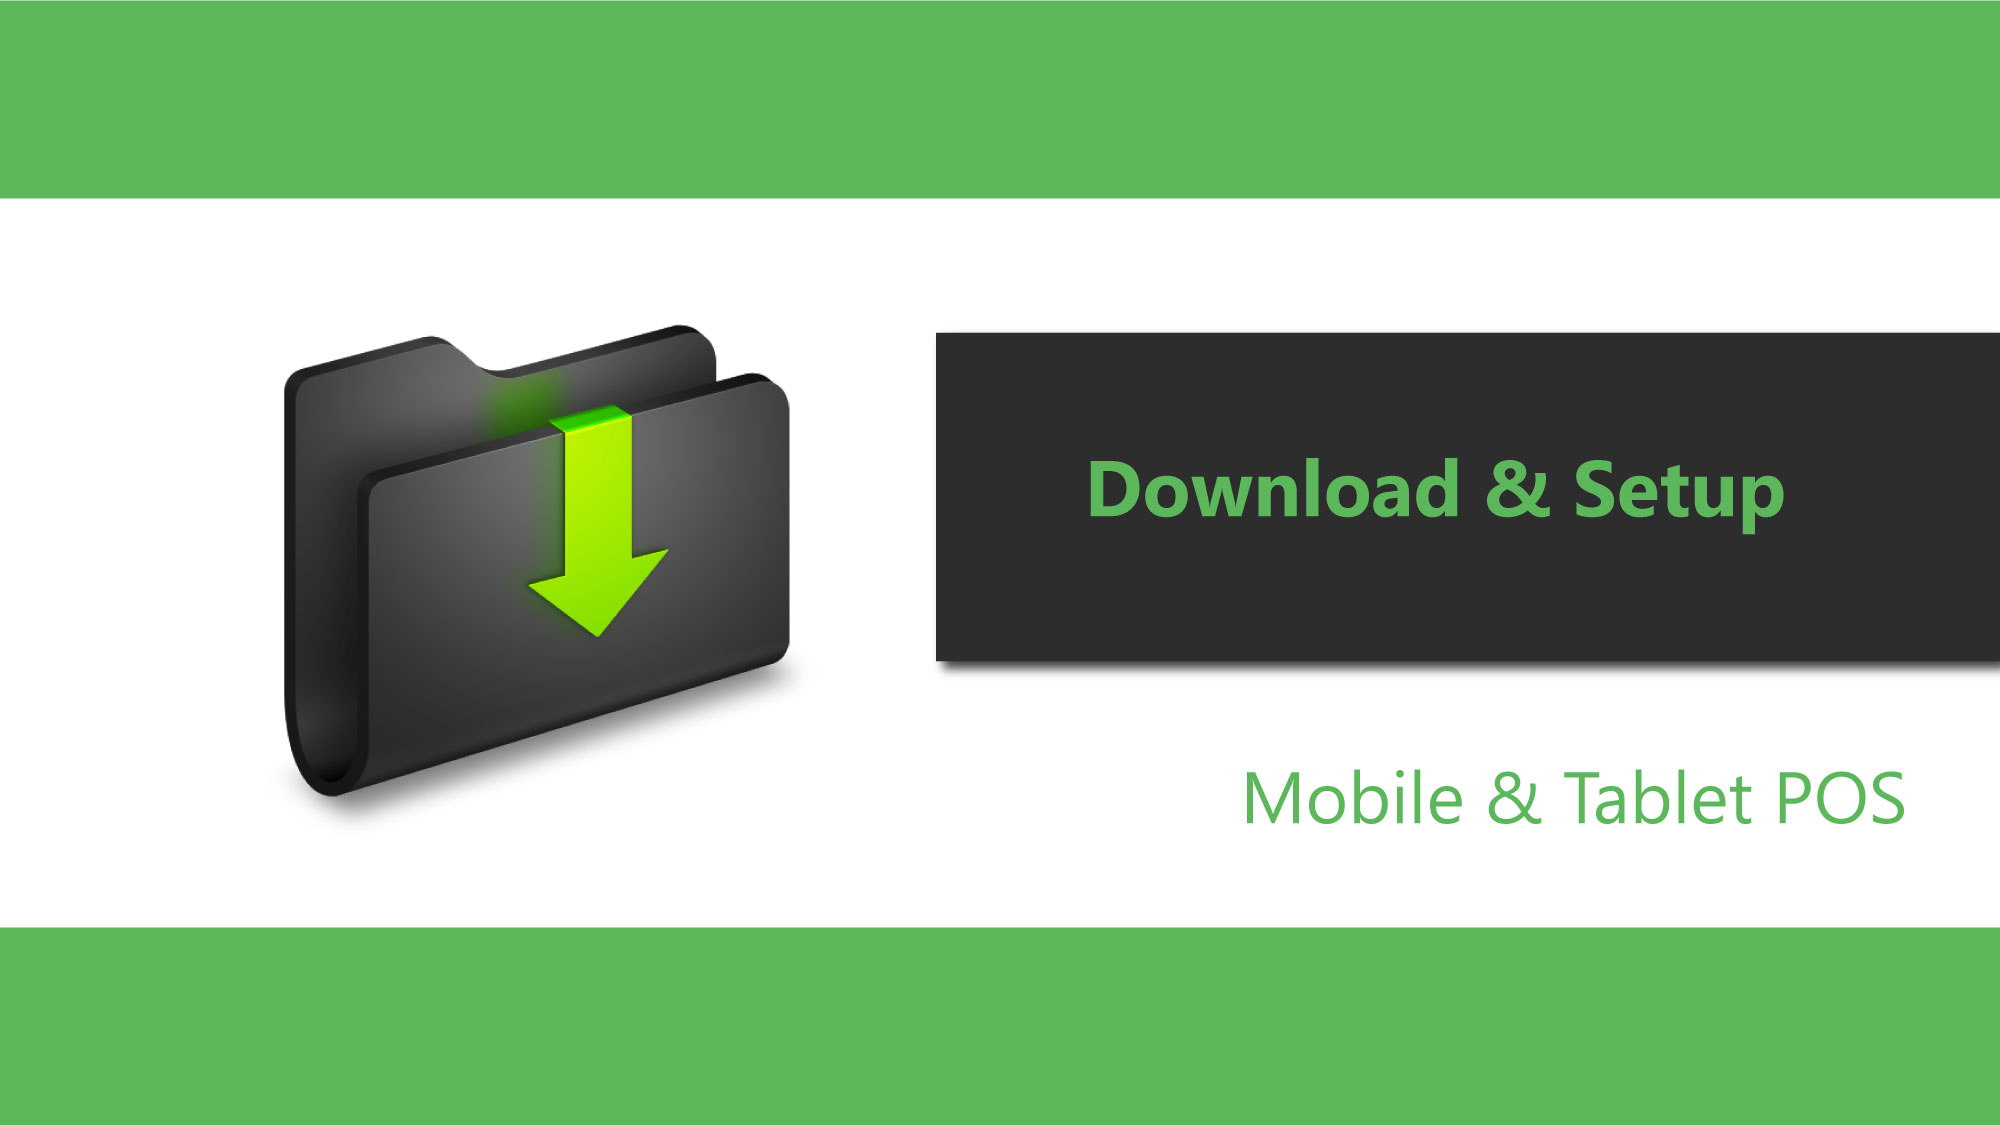 Download & setup smart POS onto Mobile & Tablet